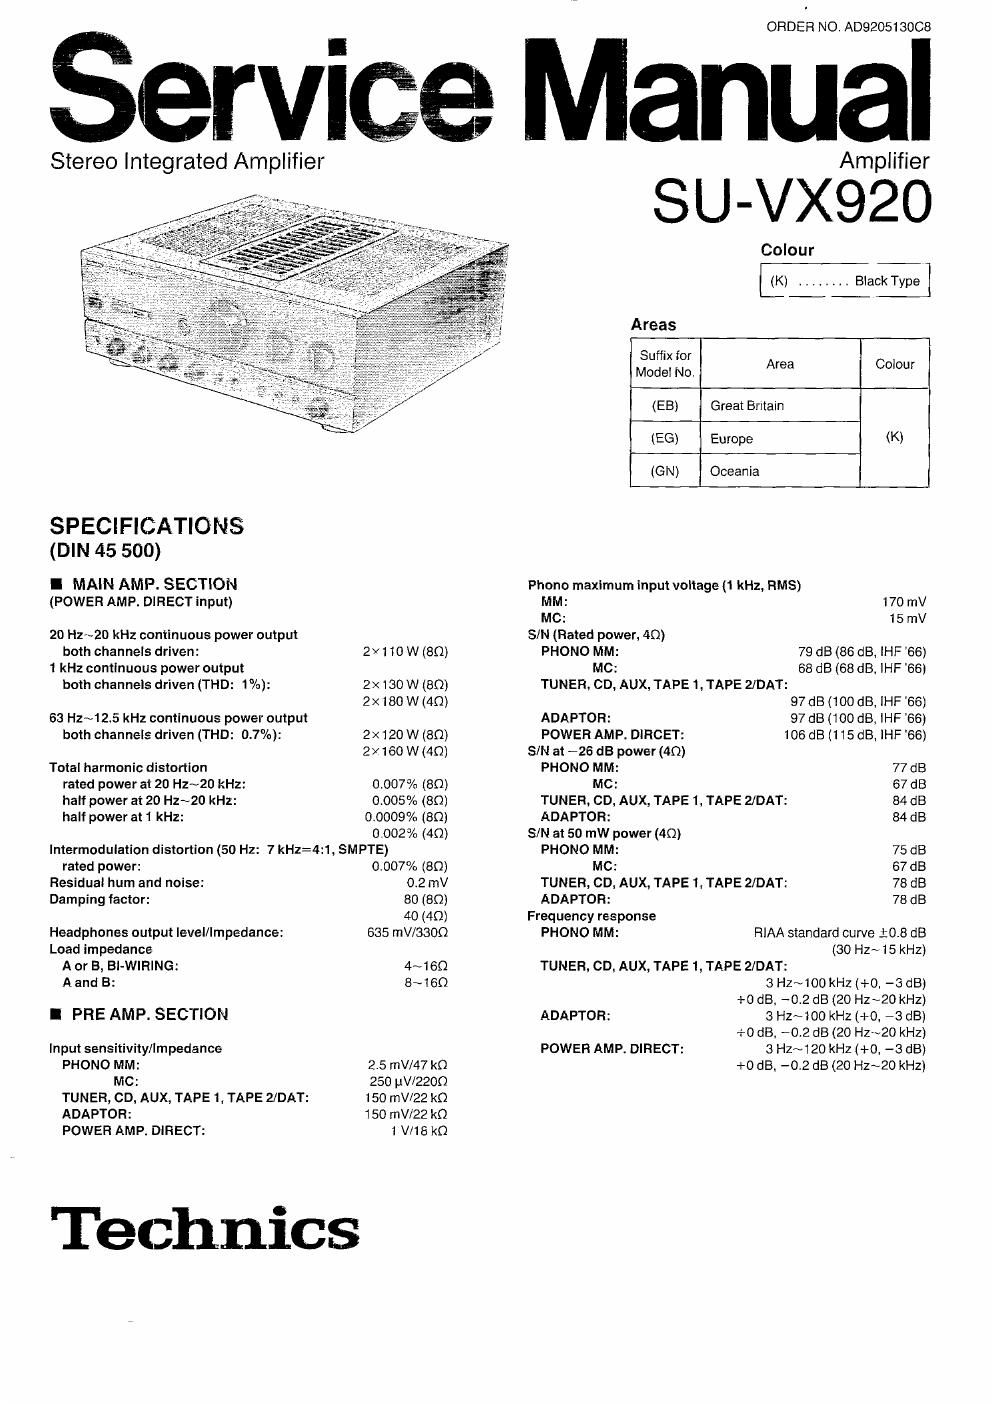 panasonic su vx 920 service manual